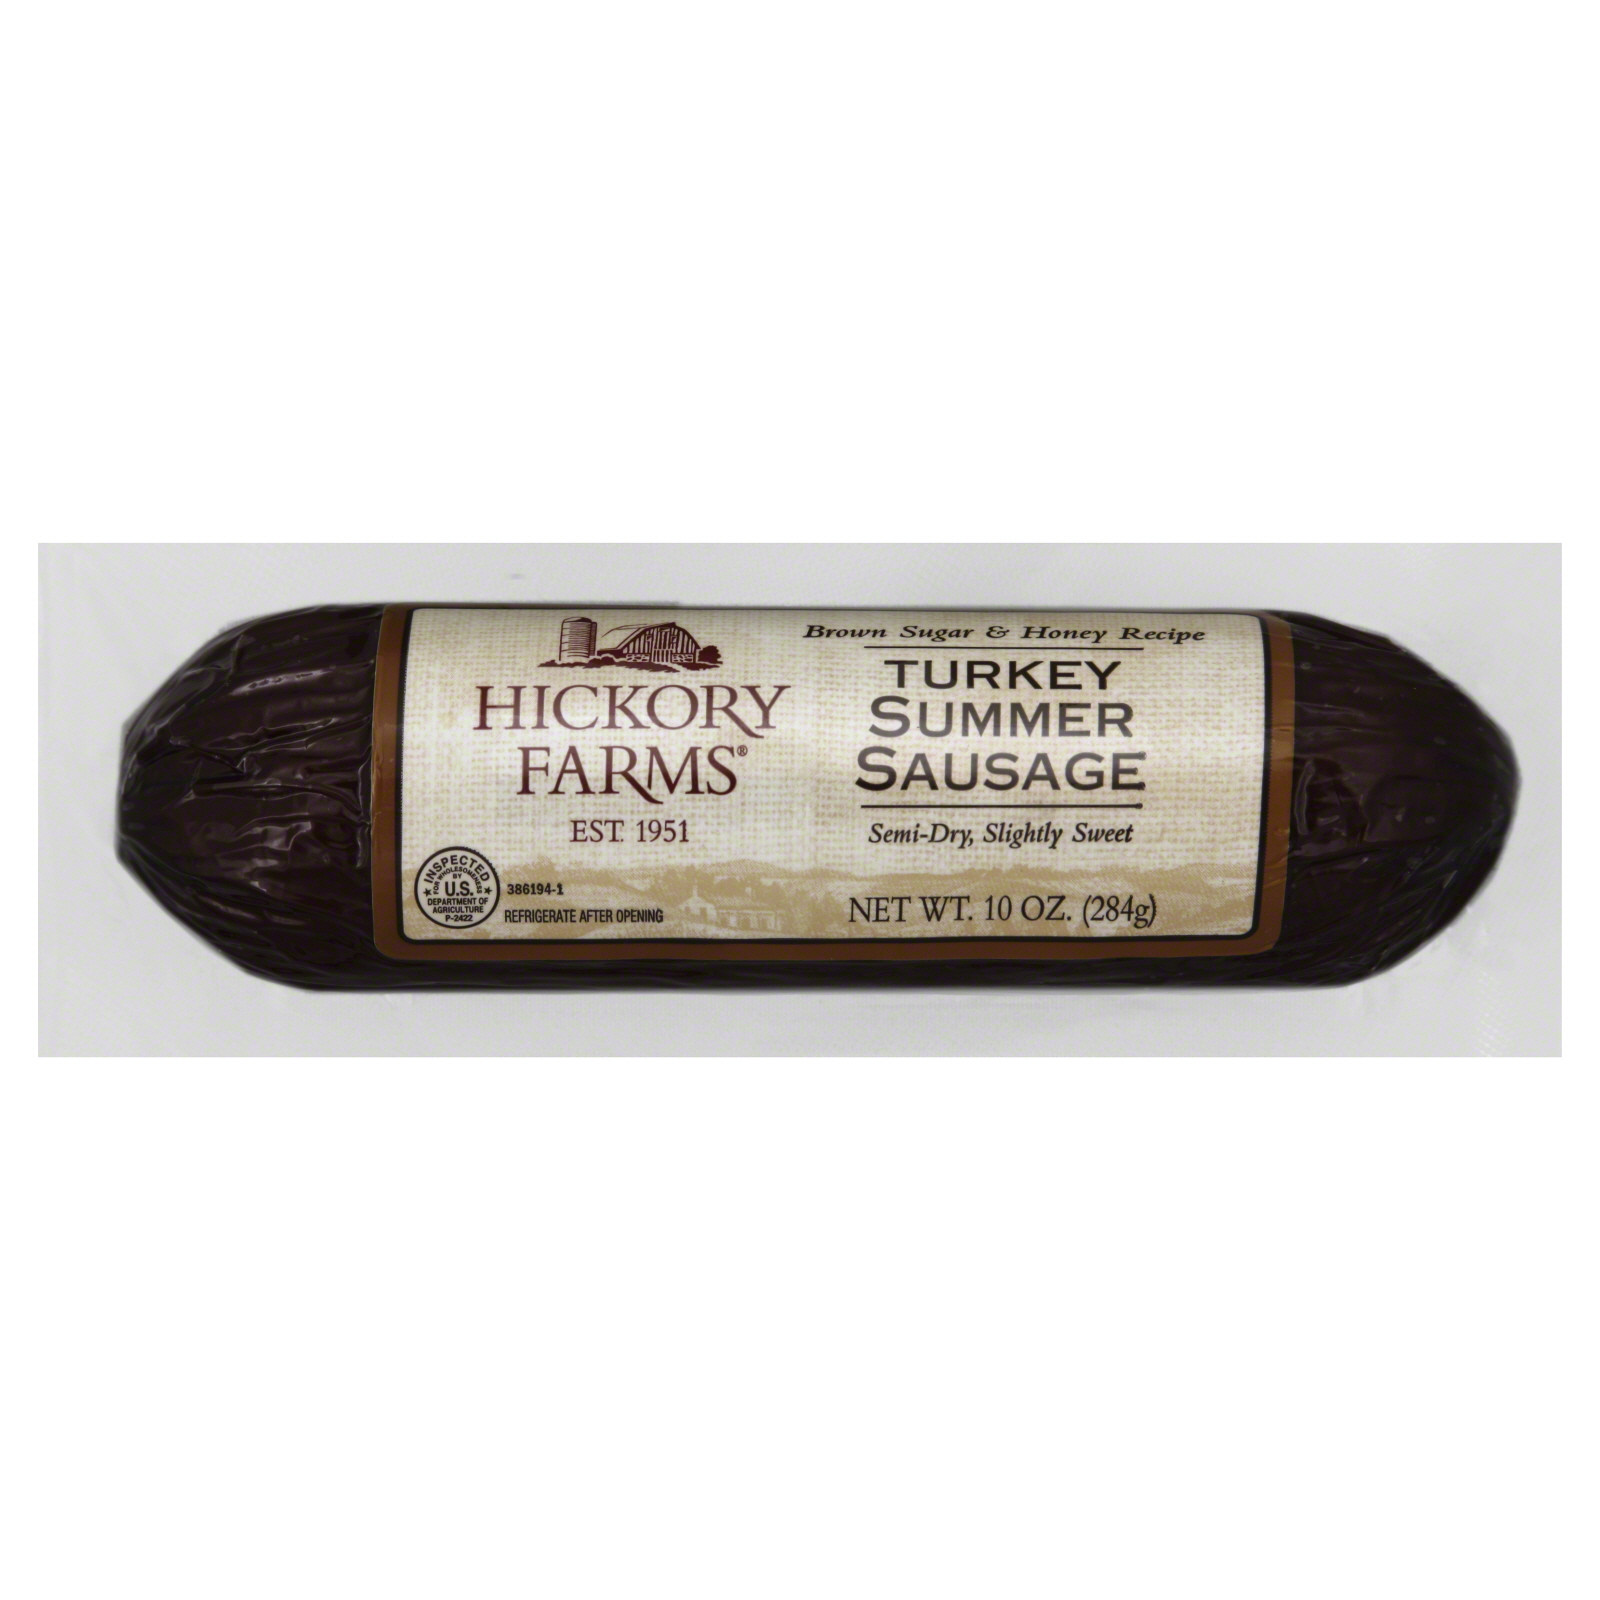 Turkey Summer Sausage
 Hickory Farms Turkey Summer Sausage 10 oz